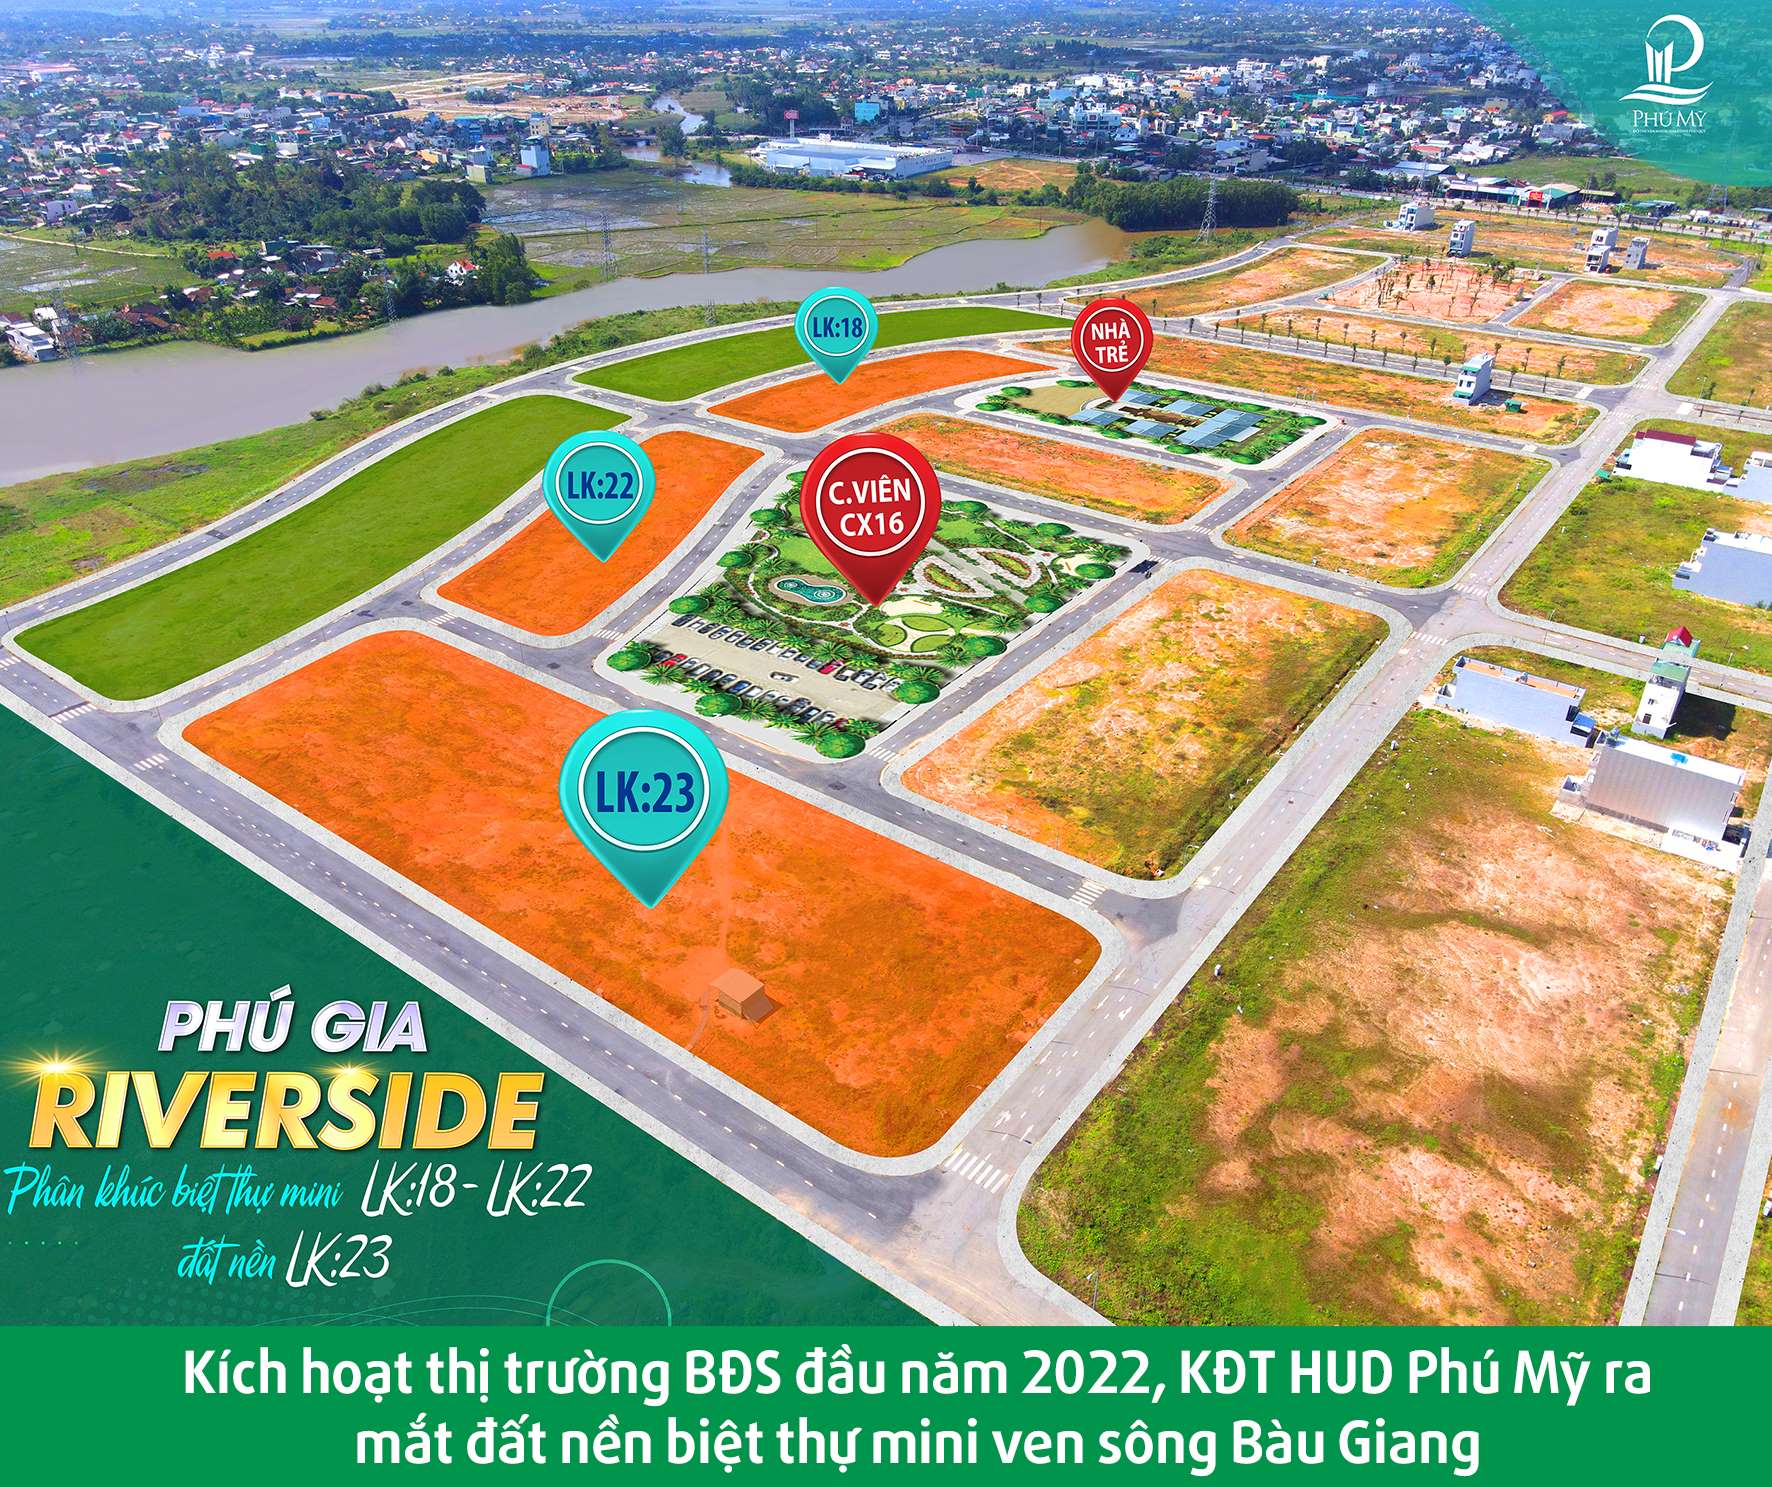 Phan Khu Phu Gia Riverside Phu My